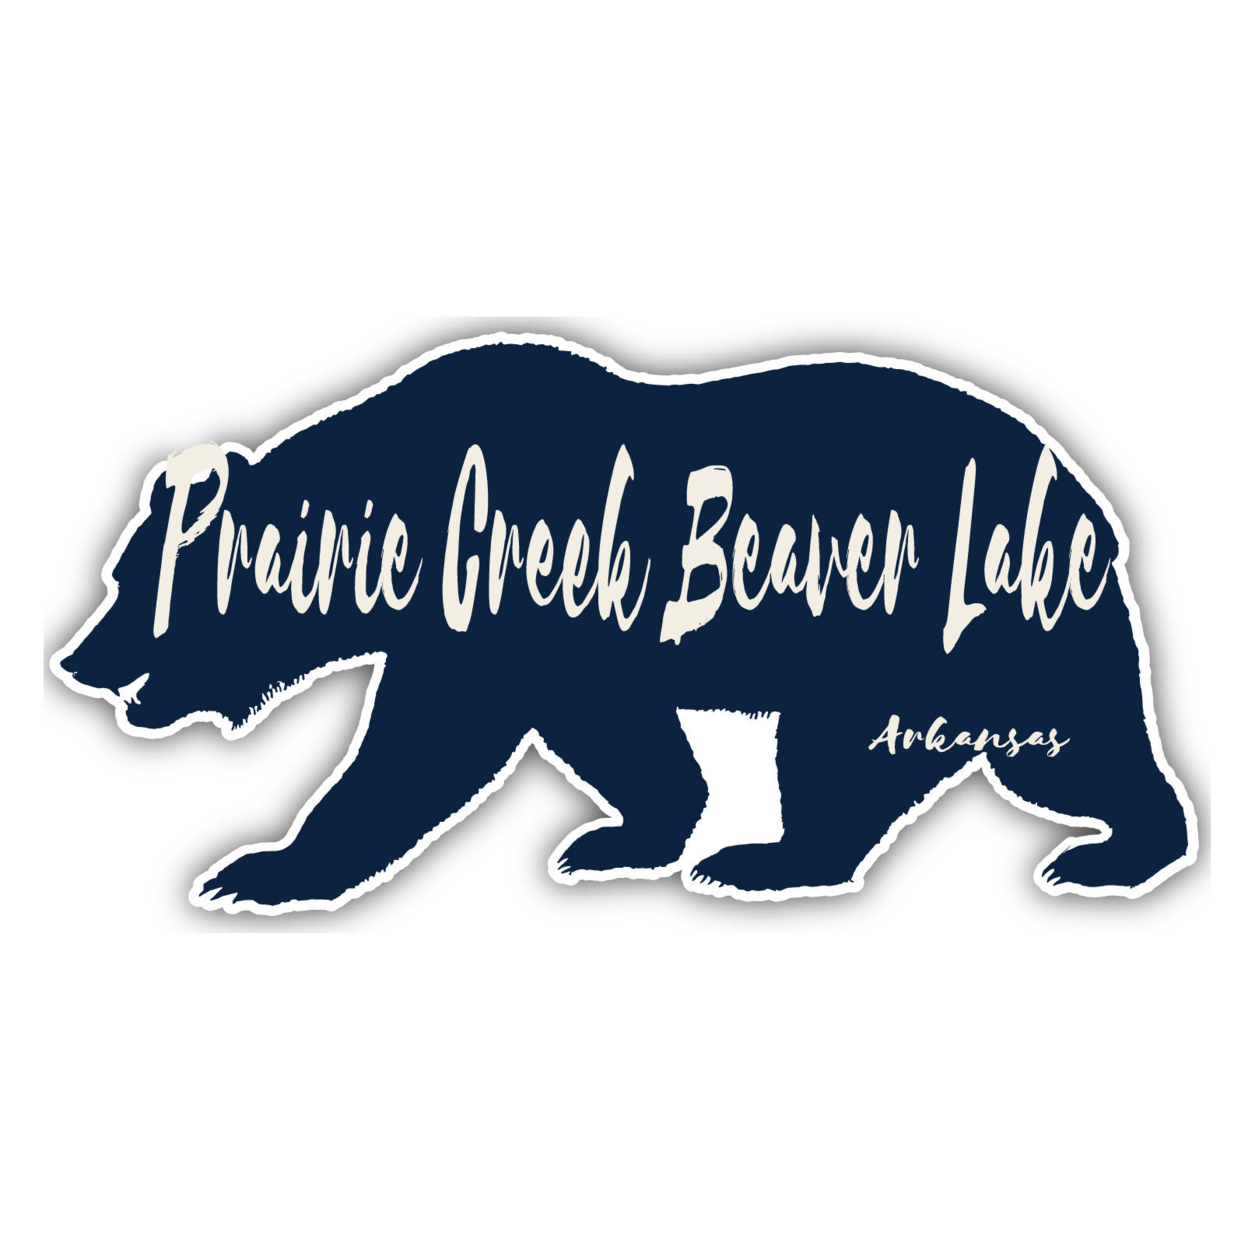 Prairie Creek Beaver Lake Arkansas Souvenir Decorative Stickers (Choose Theme And Size) - Single Unit, 4-Inch, Bear